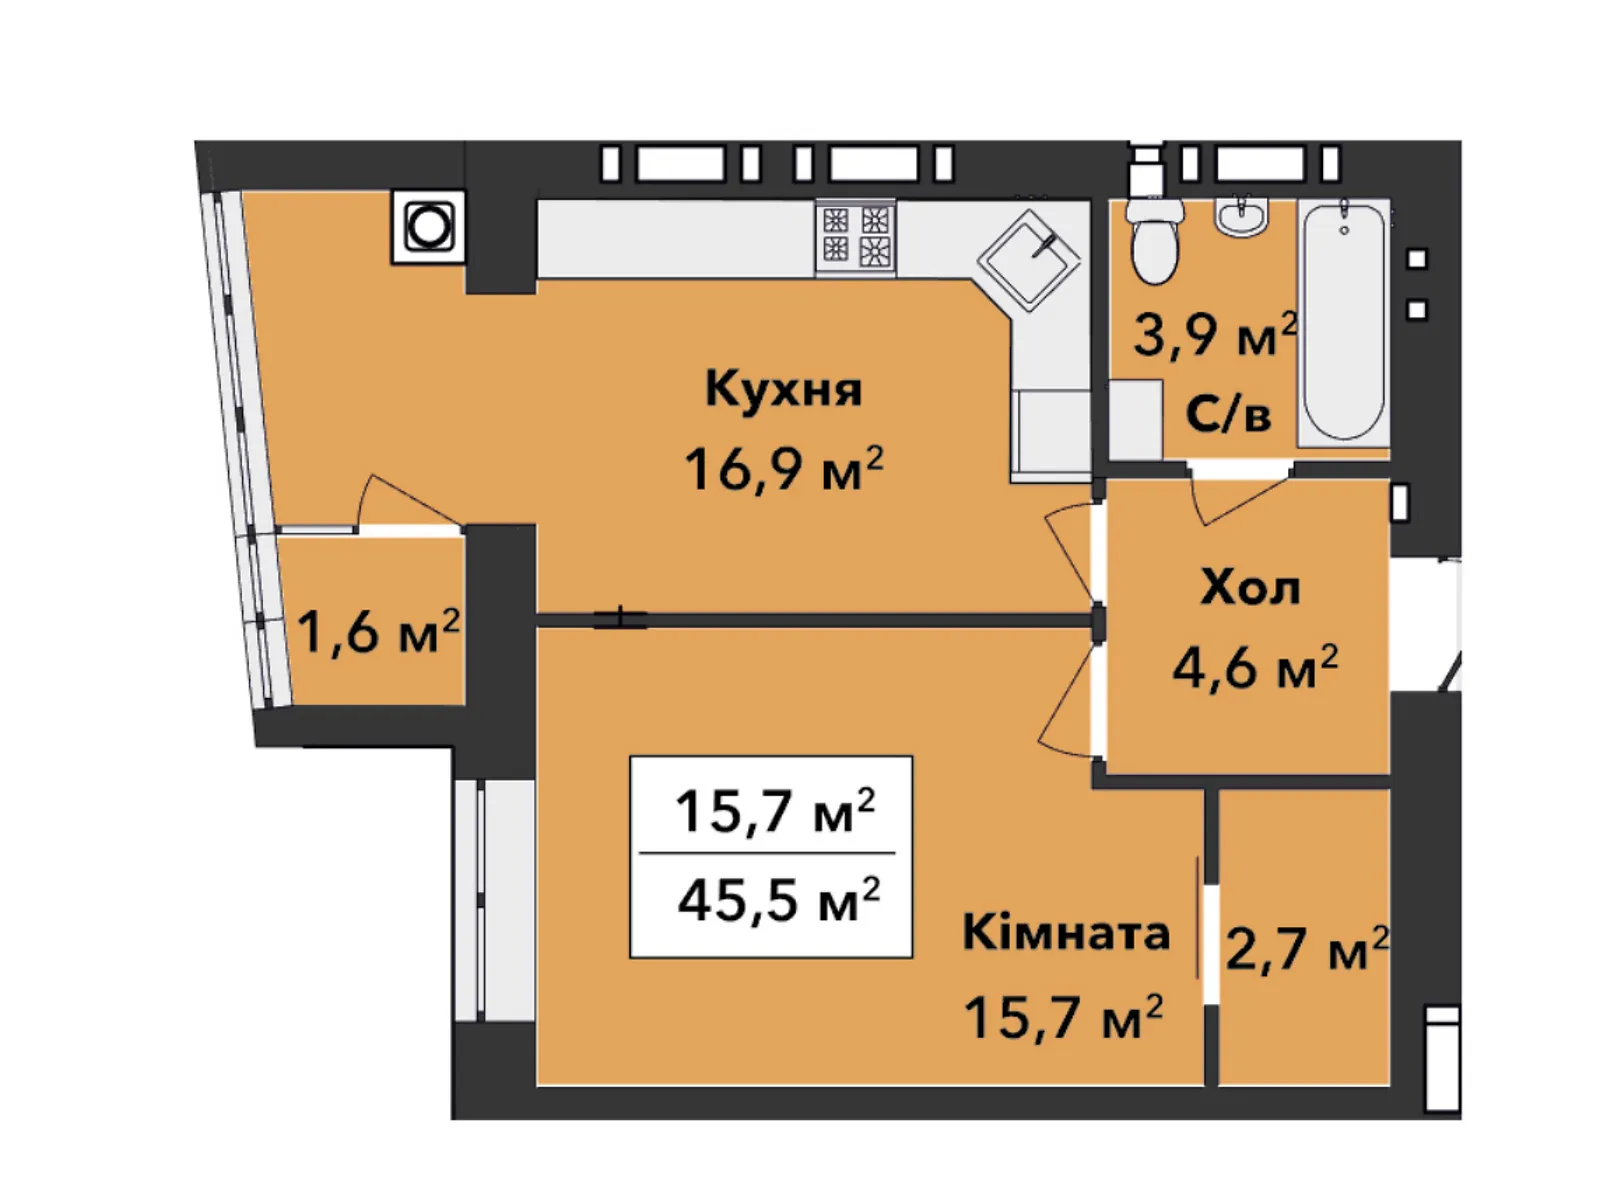 Продається 1-кімнатна квартира 45 кв. м у Хмельницькому, вул. Панаса Мирного, 9